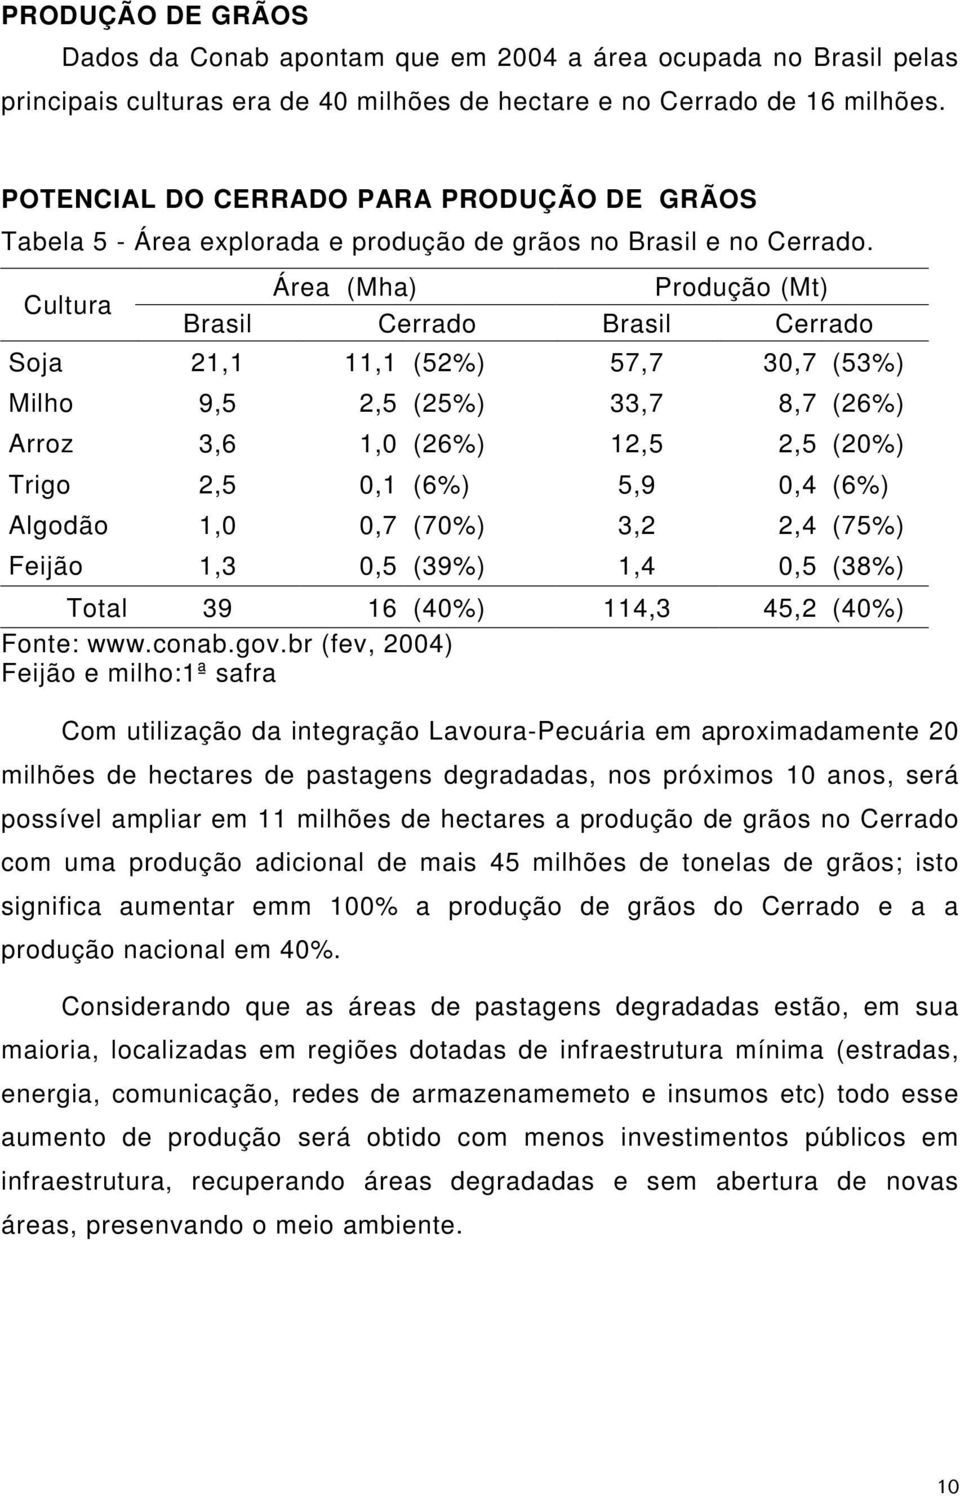 Cultura Área (Mha) Produção (Mt) Brasil Cerrado Brasil Cerrado Soja 21,1 11,1 (52%) 57,7 30,7 (53%) Milho 9,5 2,5 (25%) 33,7 8,7 (26%) Arroz 3,6 1,0 (26%) 12,5 2,5 (20%) Trigo 2,5 0,1 (6%) 5,9 0,4